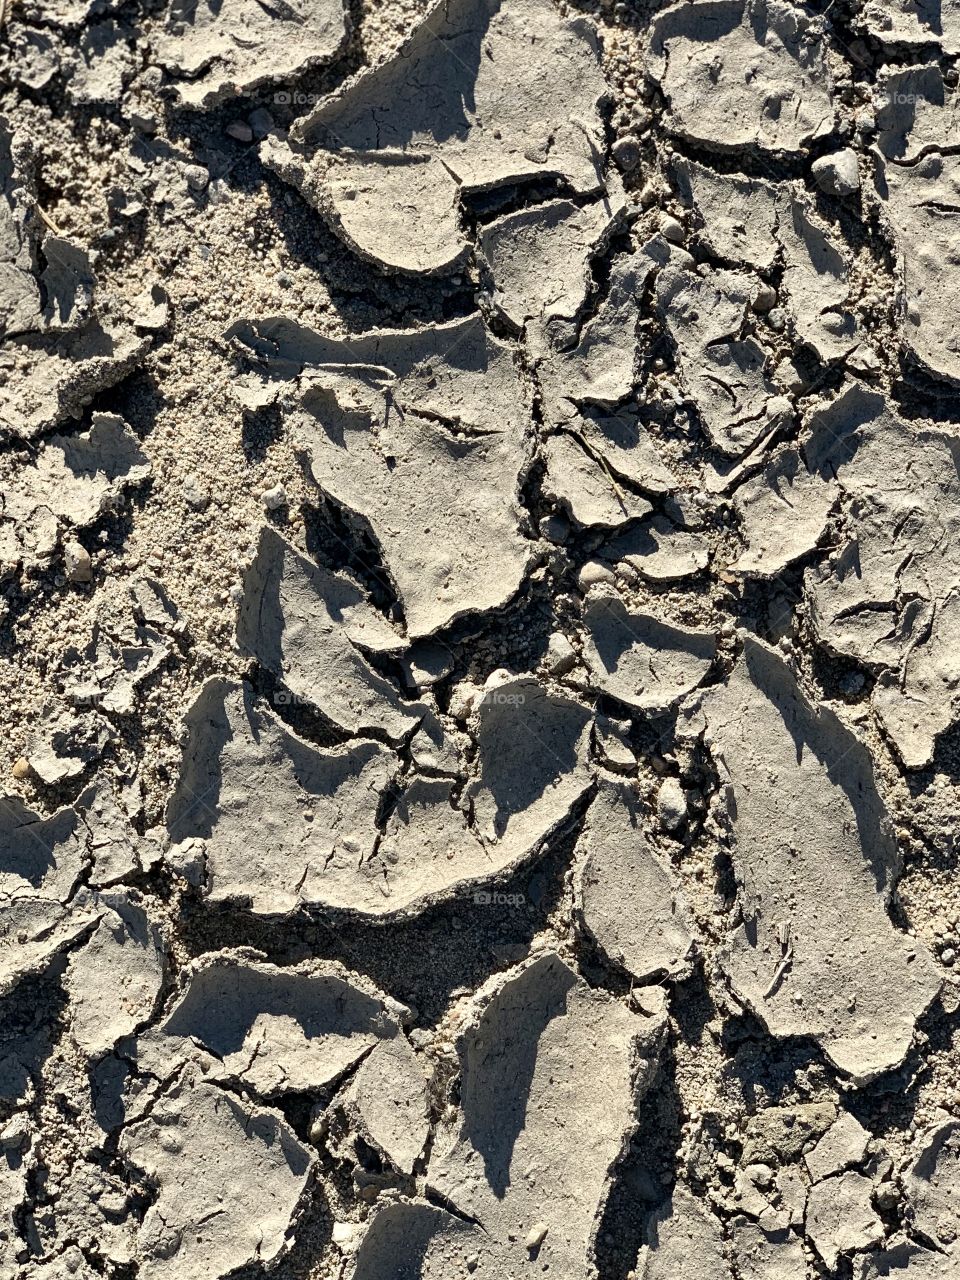 Dried mud near the river 